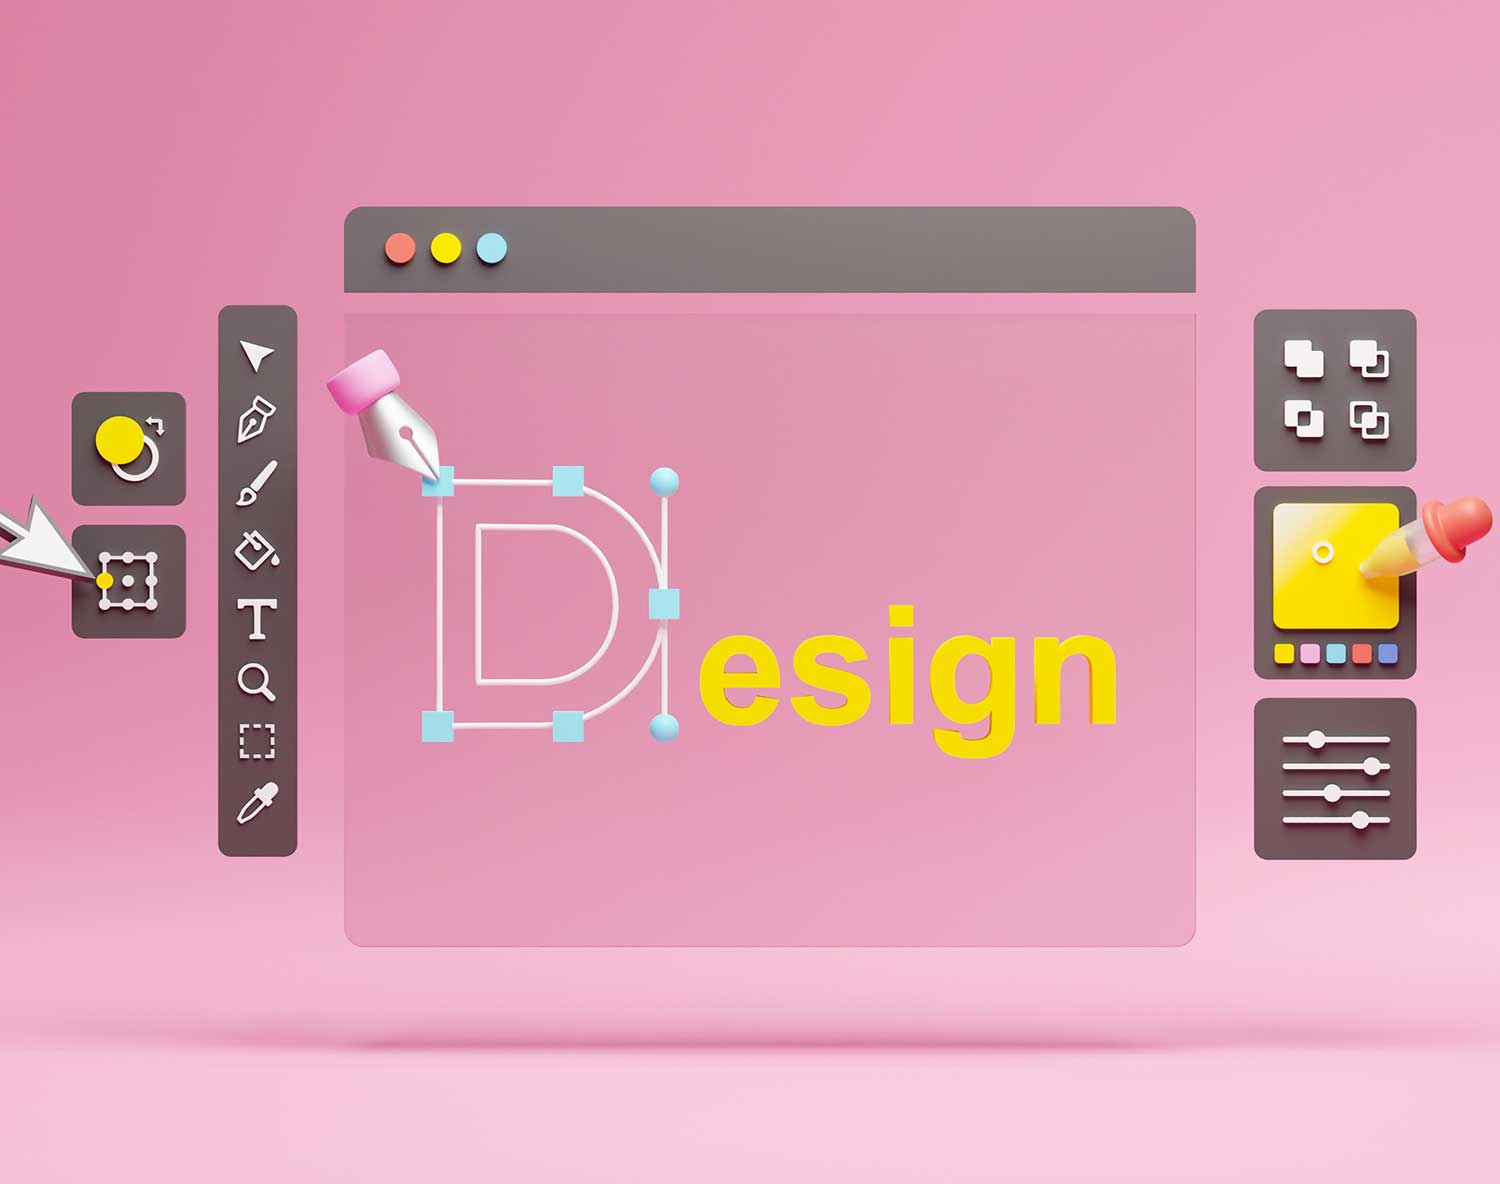 Horizontal logos reign in web design